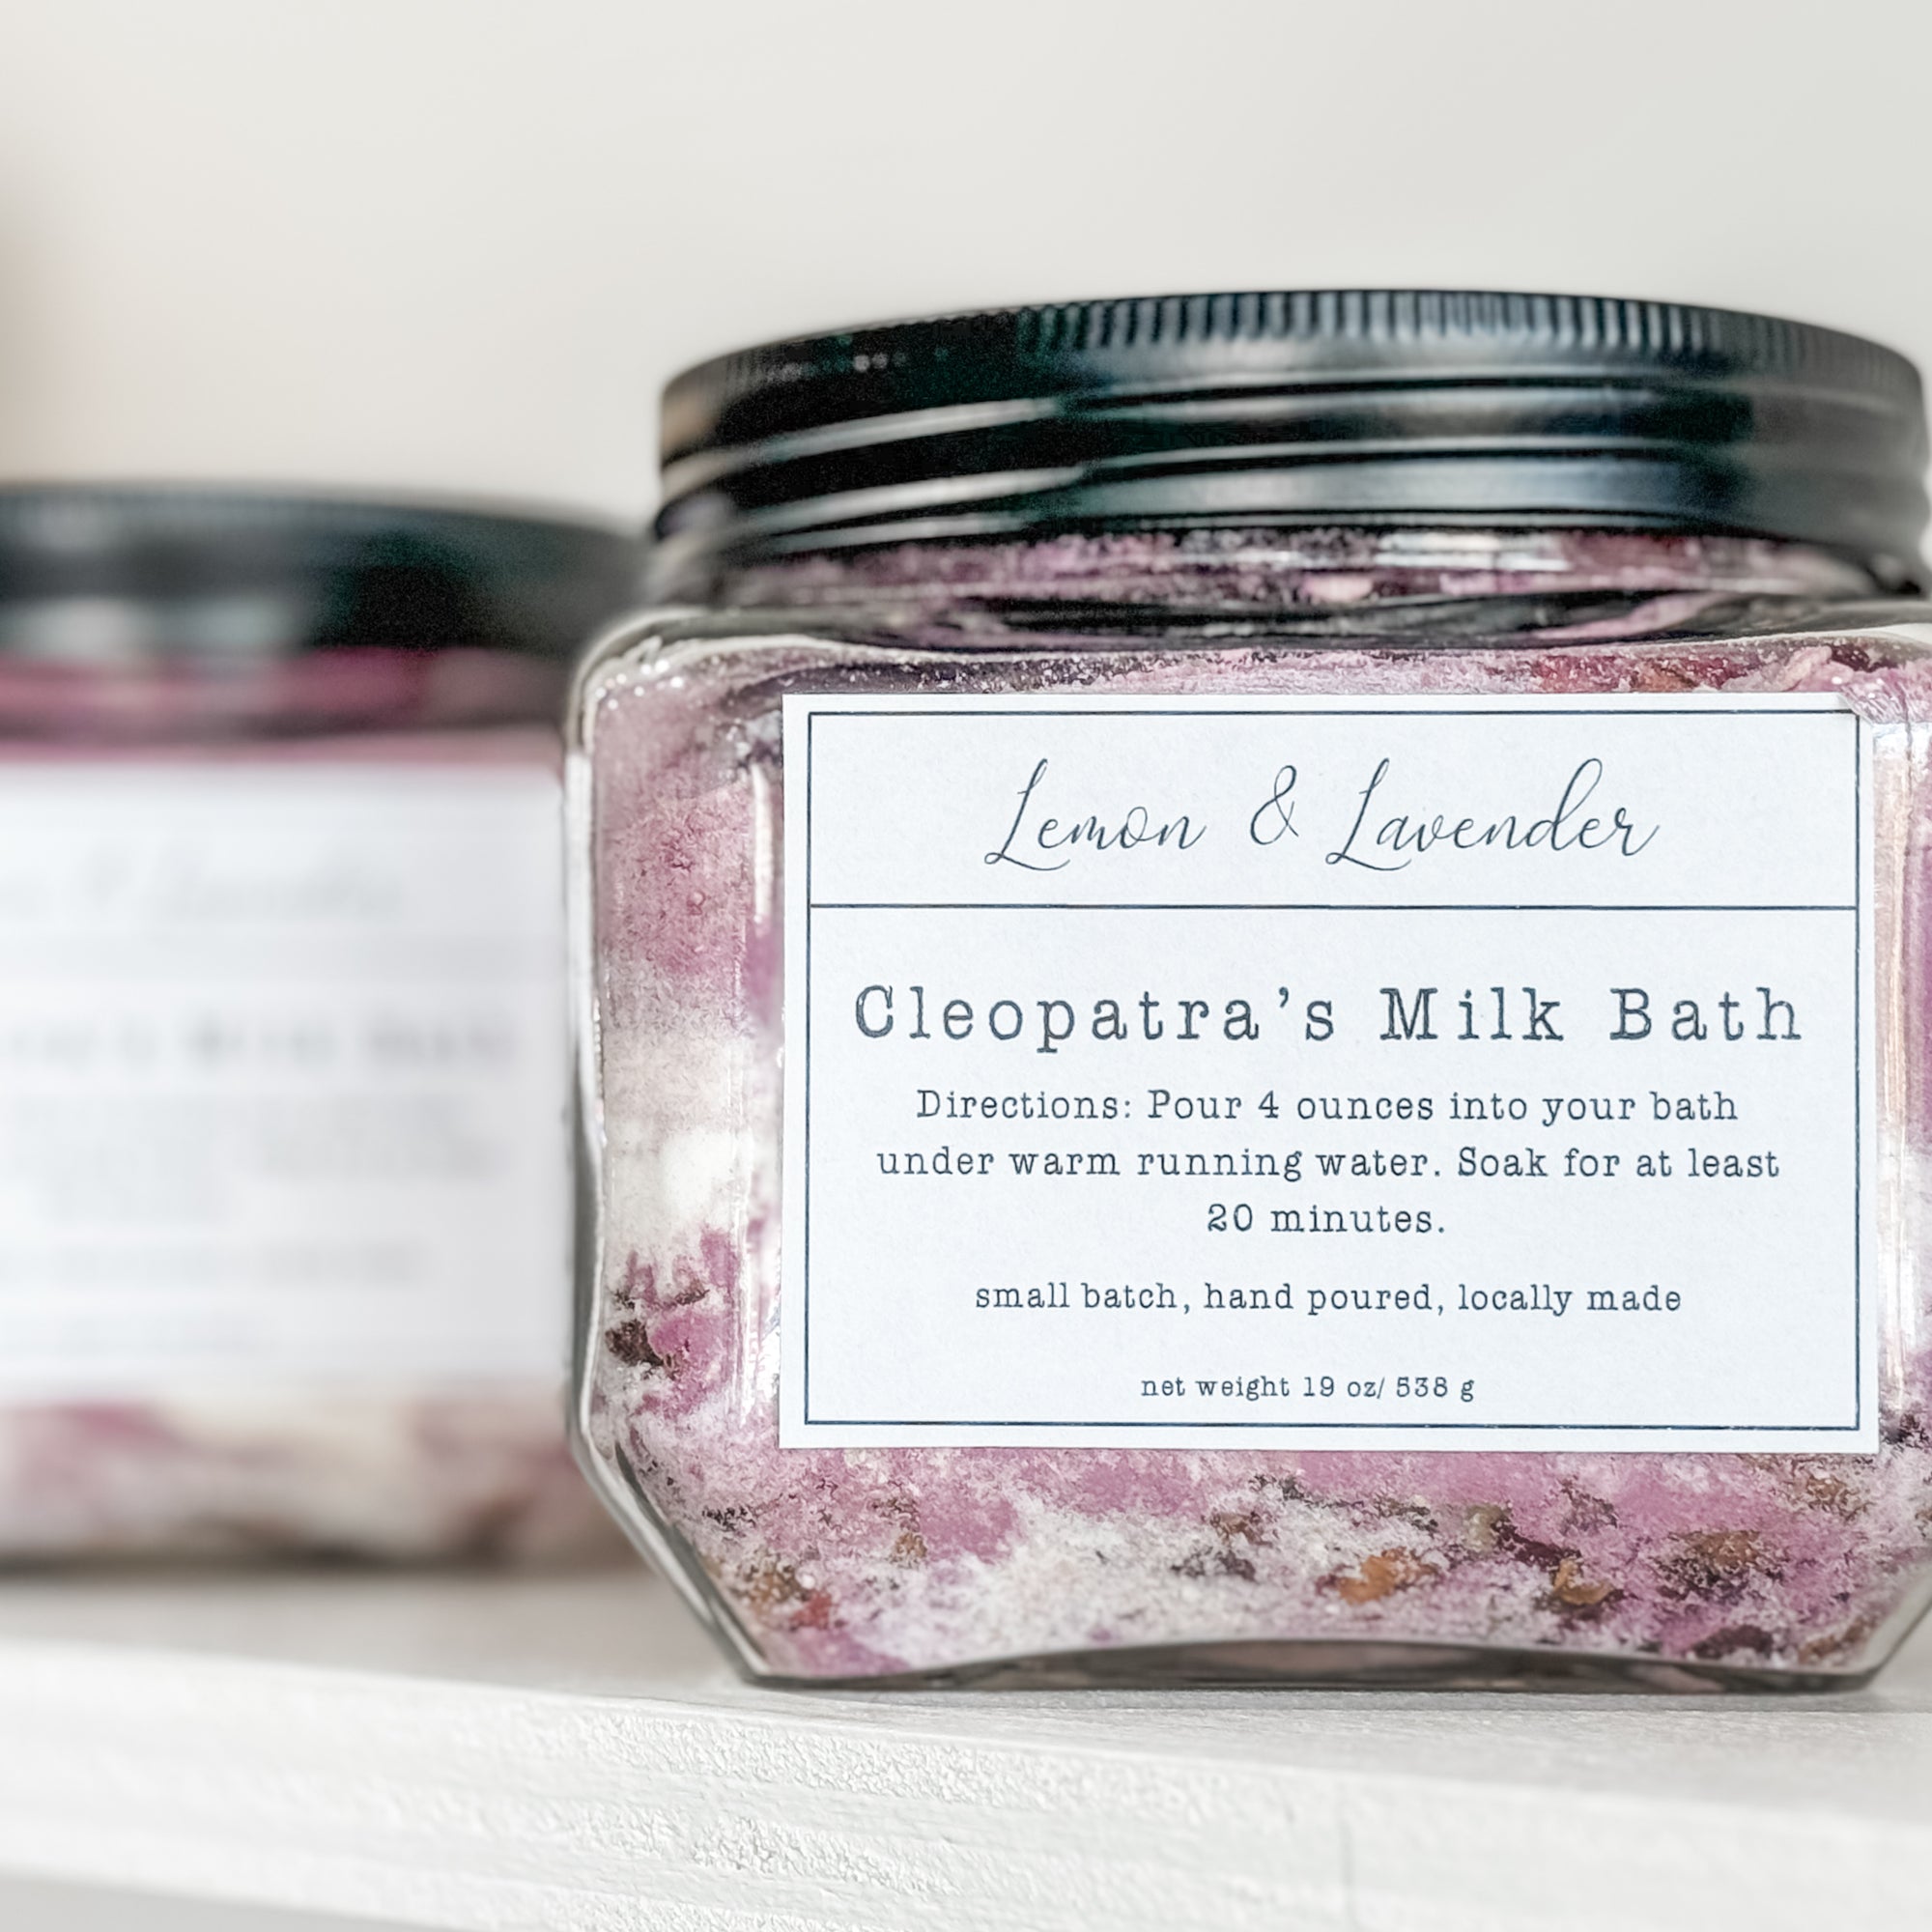 Cleopatra’s Milk Bath- Small Batch by Lemon & Lavender - Lemon & Lavender